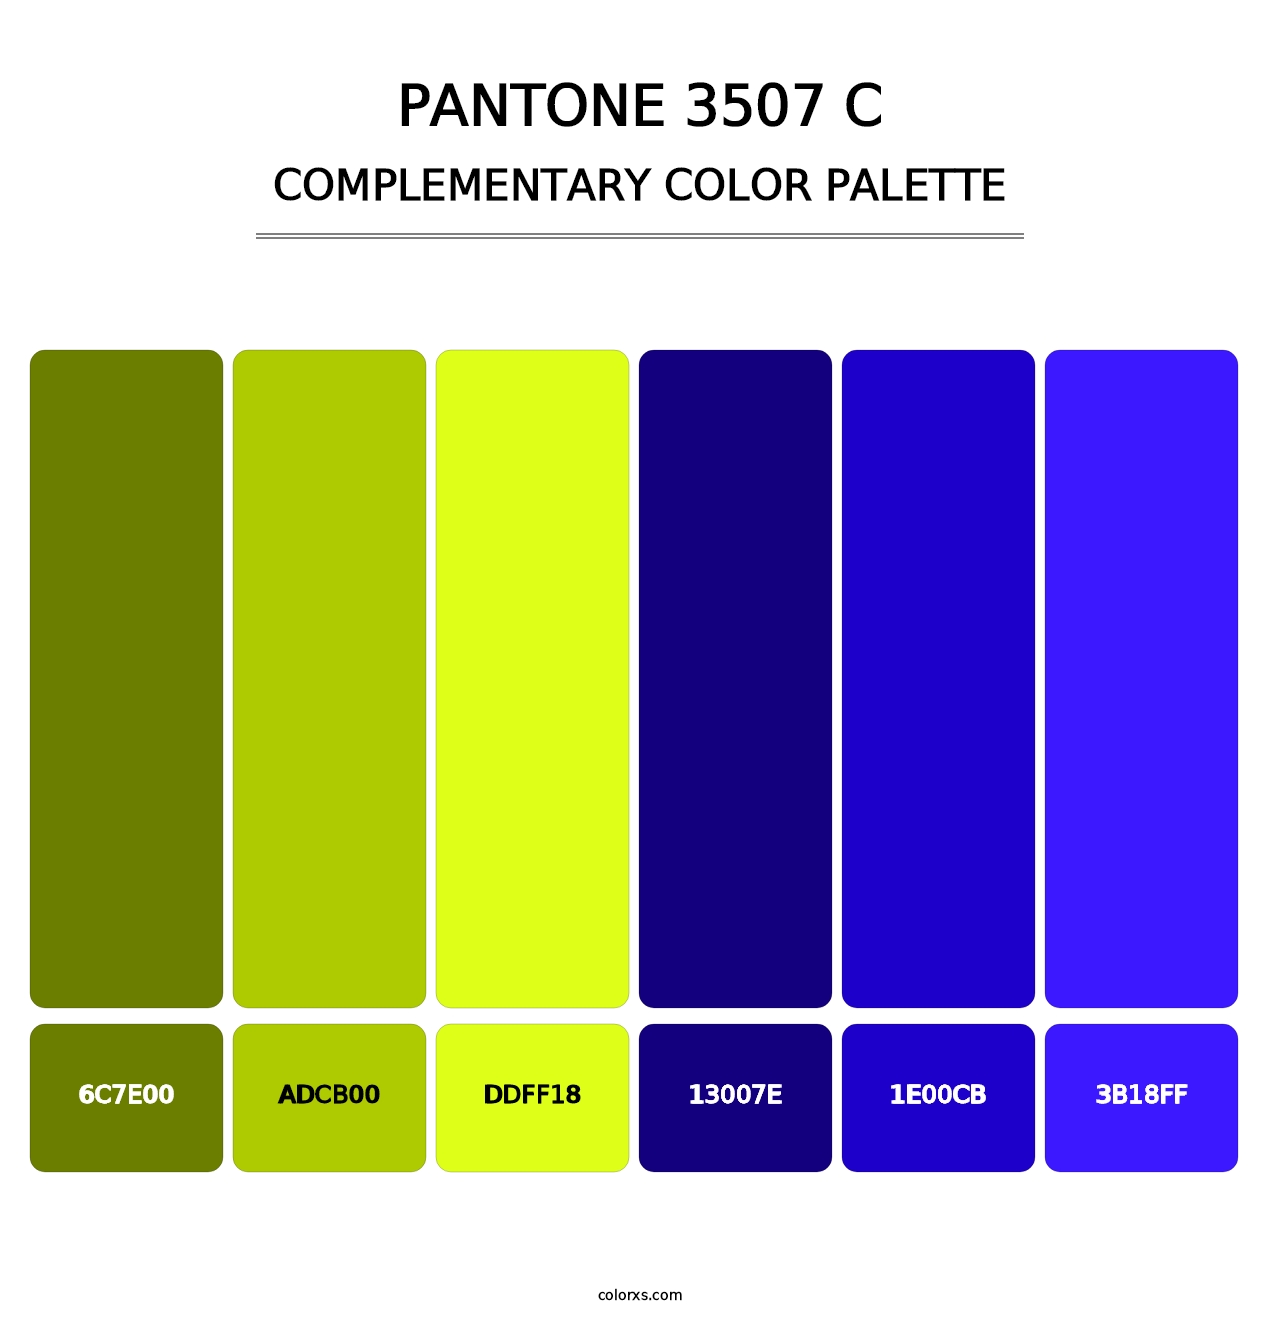 PANTONE 3507 C - Complementary Color Palette